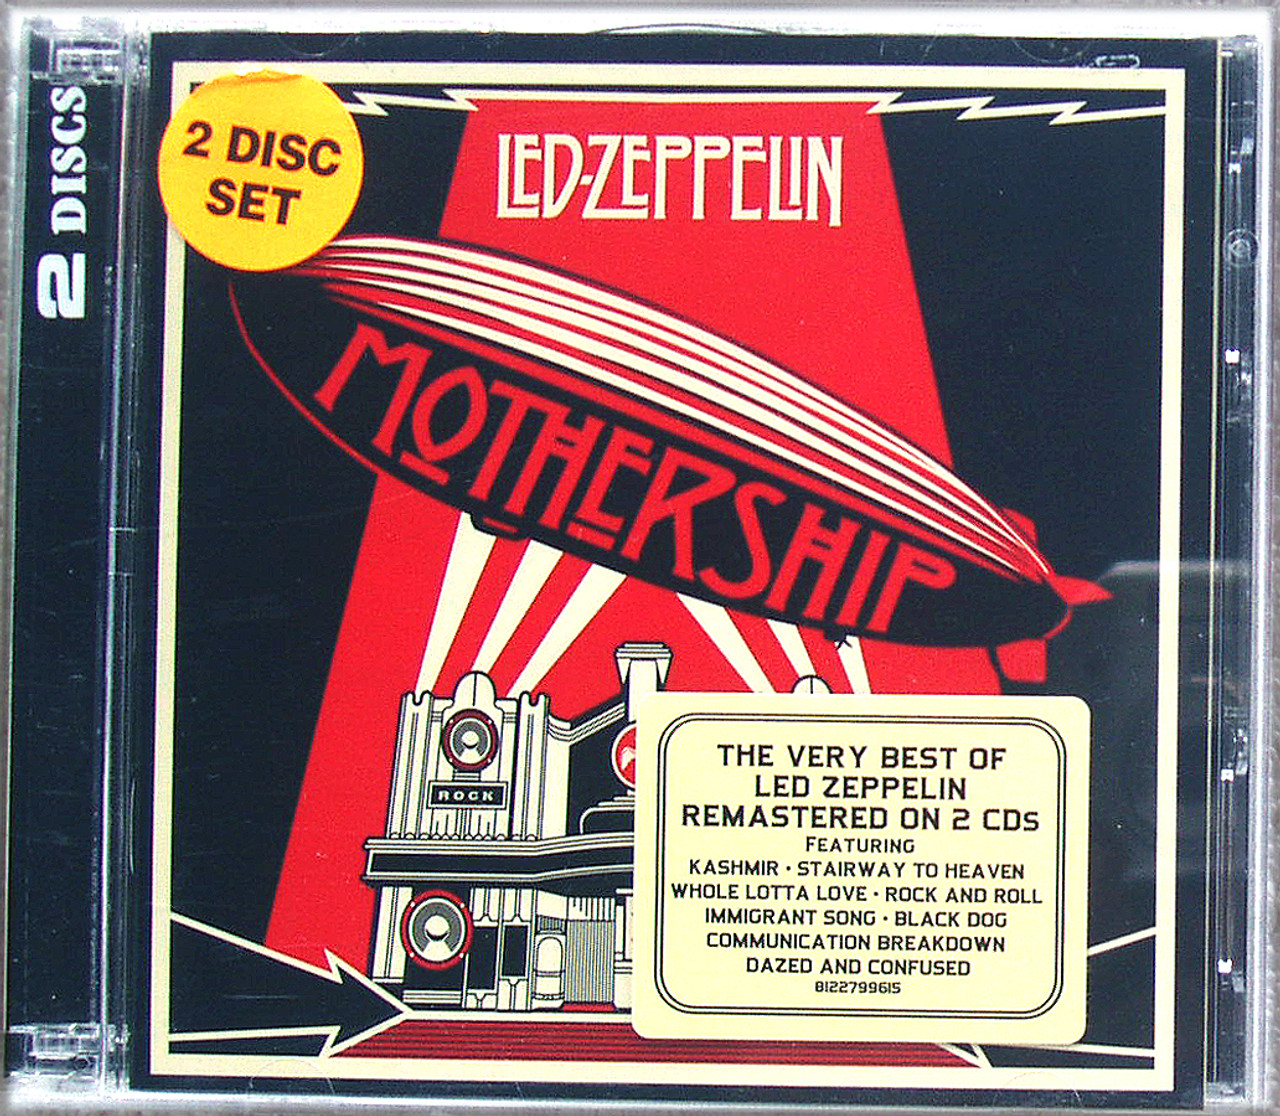 Led Zeppelin CD, 2007 at Wolfgang's